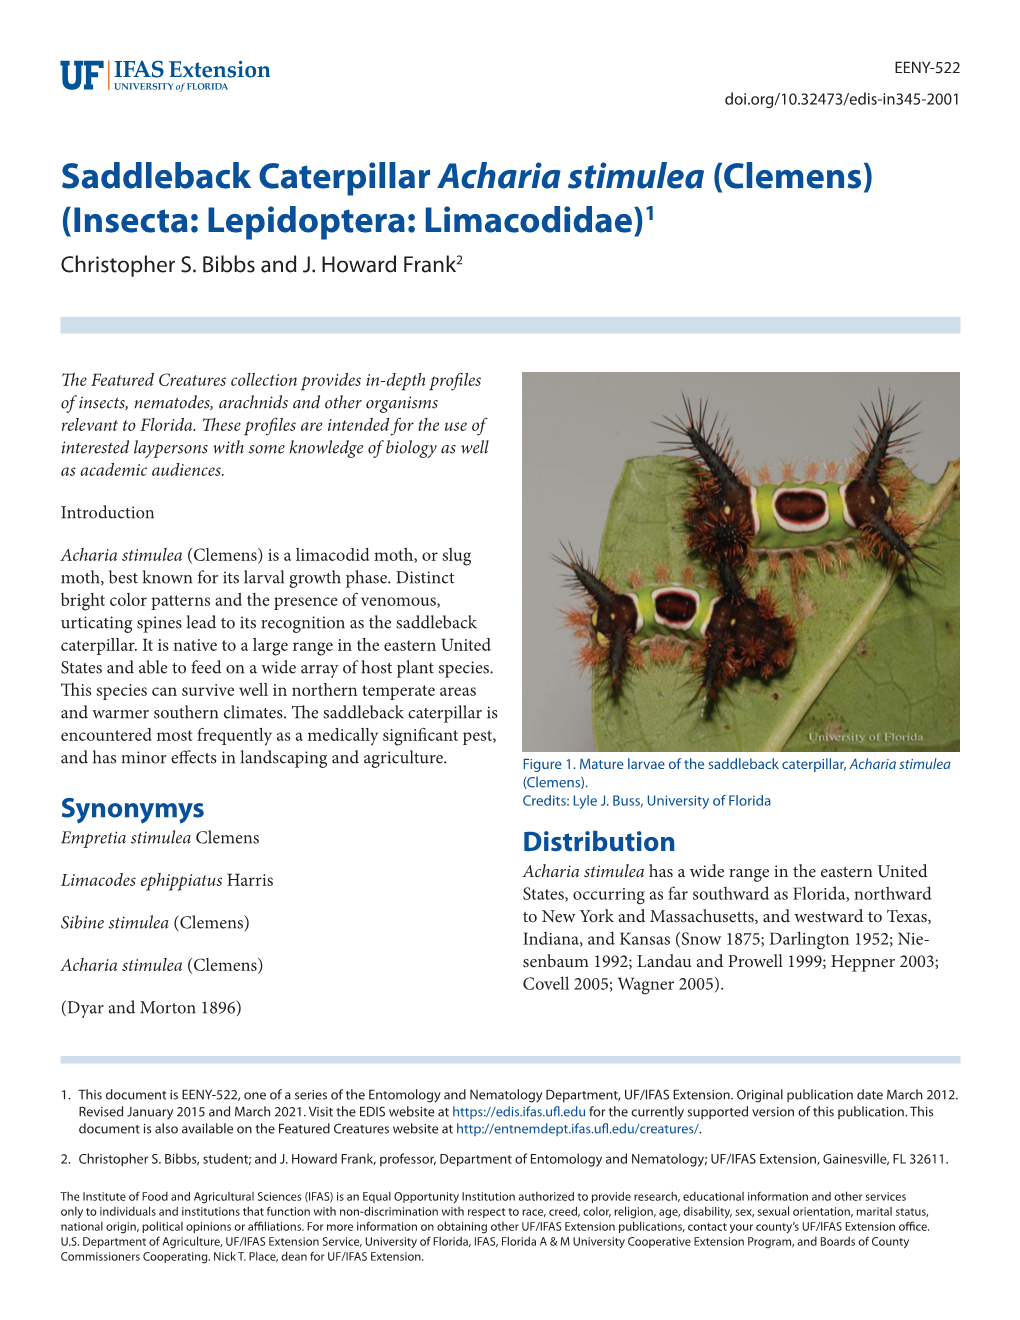 Saddleback Caterpillar Acharia Stimulea (Clemens) (Insecta: Lepidoptera: Limacodidae)1 Christopher S